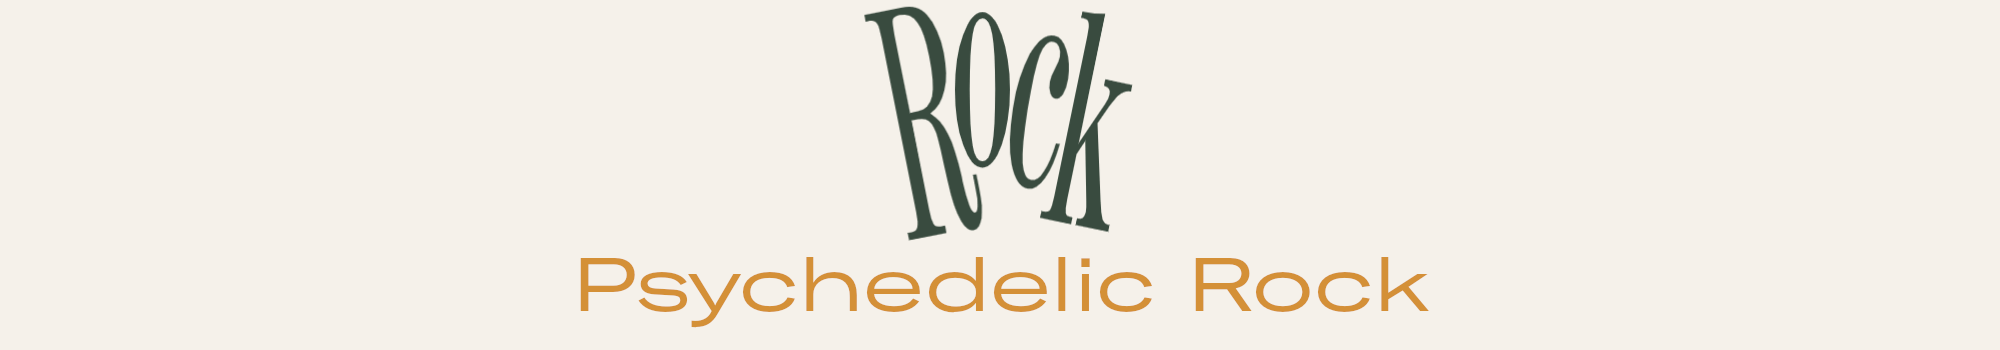 Rubrik till kategori: Rock - Psychedelic Rock